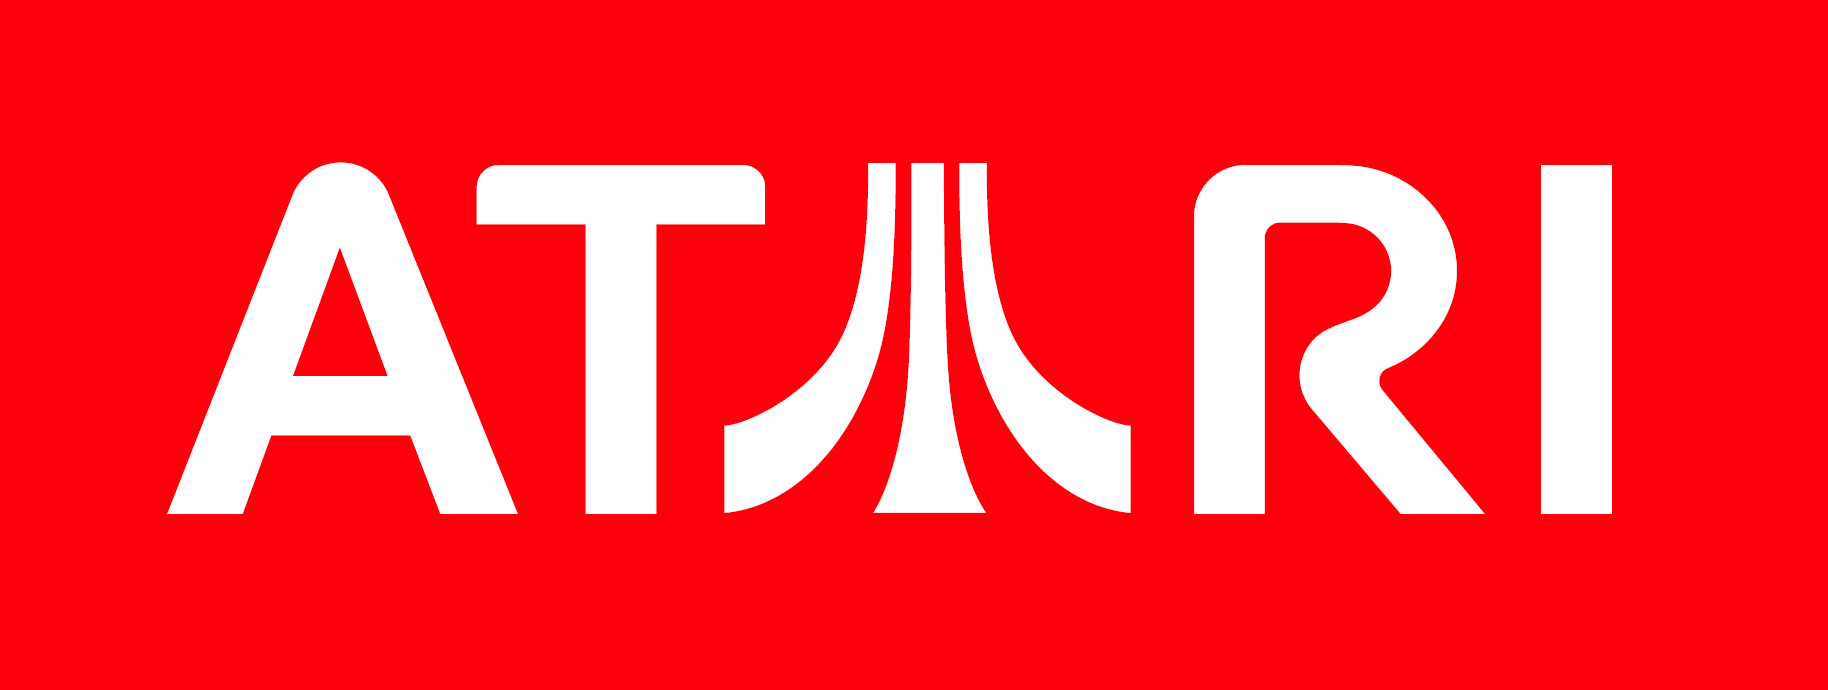 File:atari Logo.png - Atari, Transparent background PNG HD thumbnail